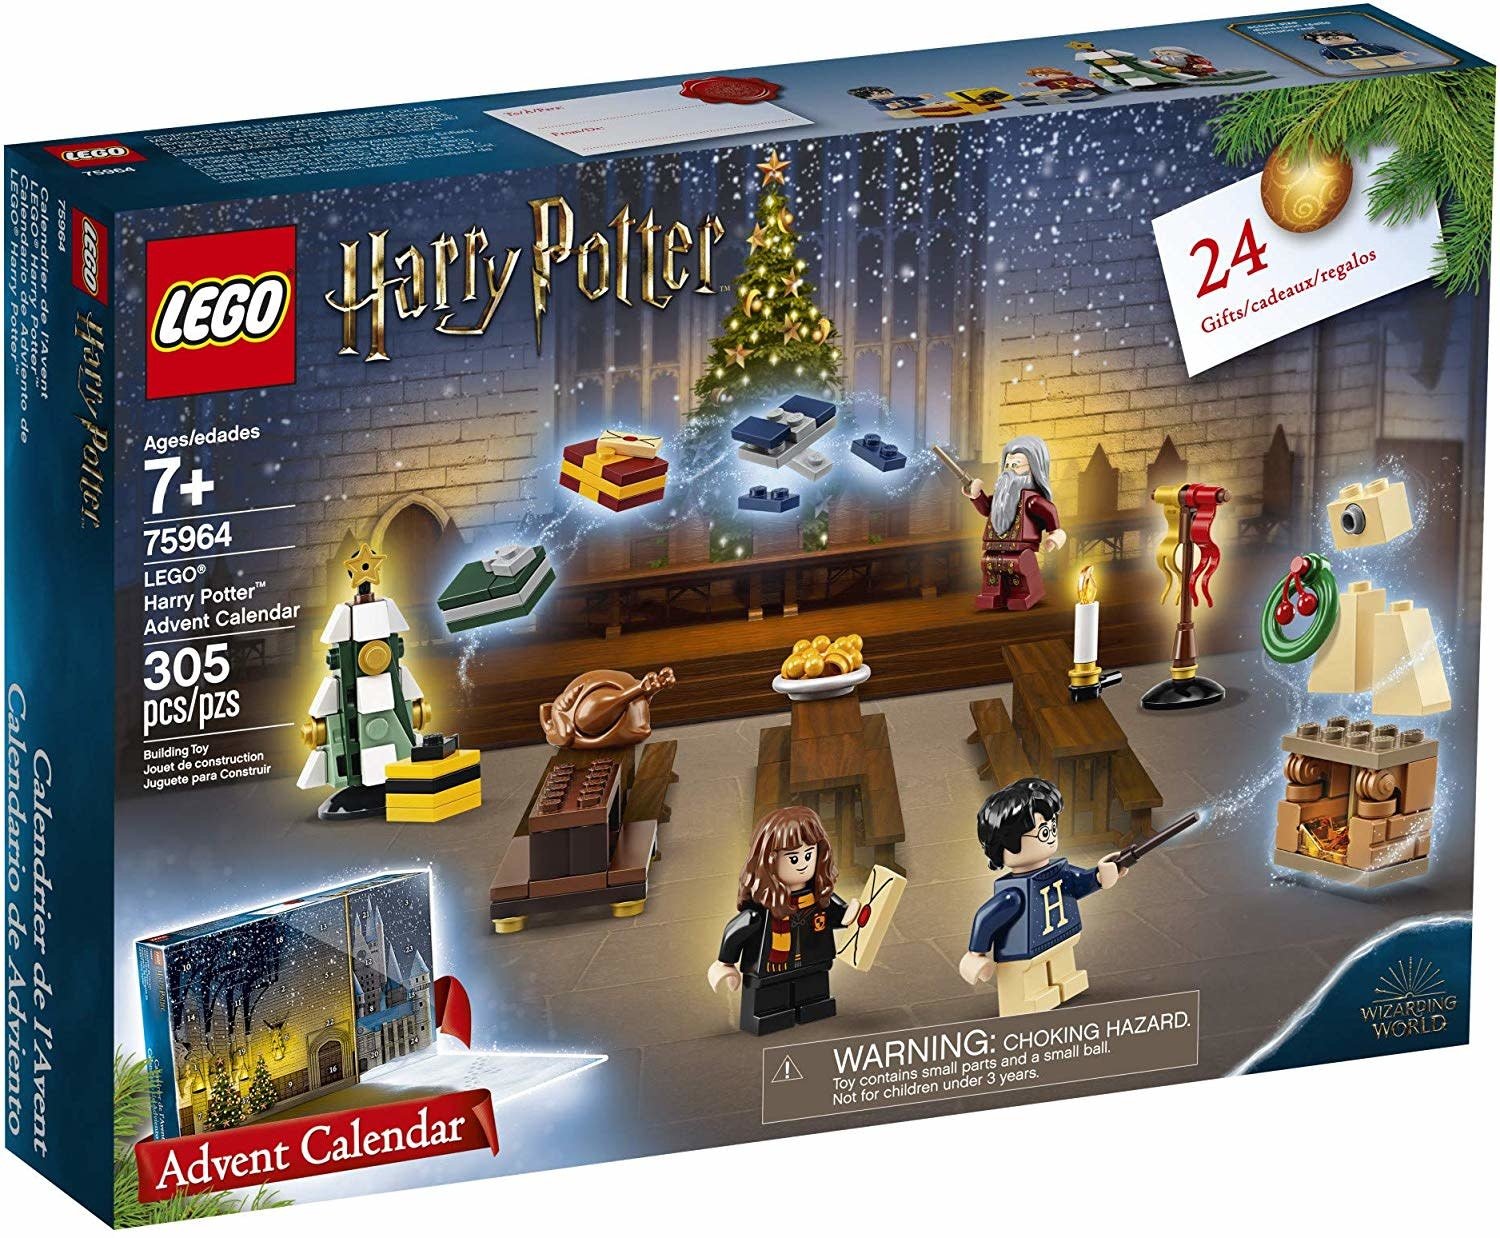 Lego Advent Calendar Harry Potter 2019 Minds Alive Toys Crafts Books